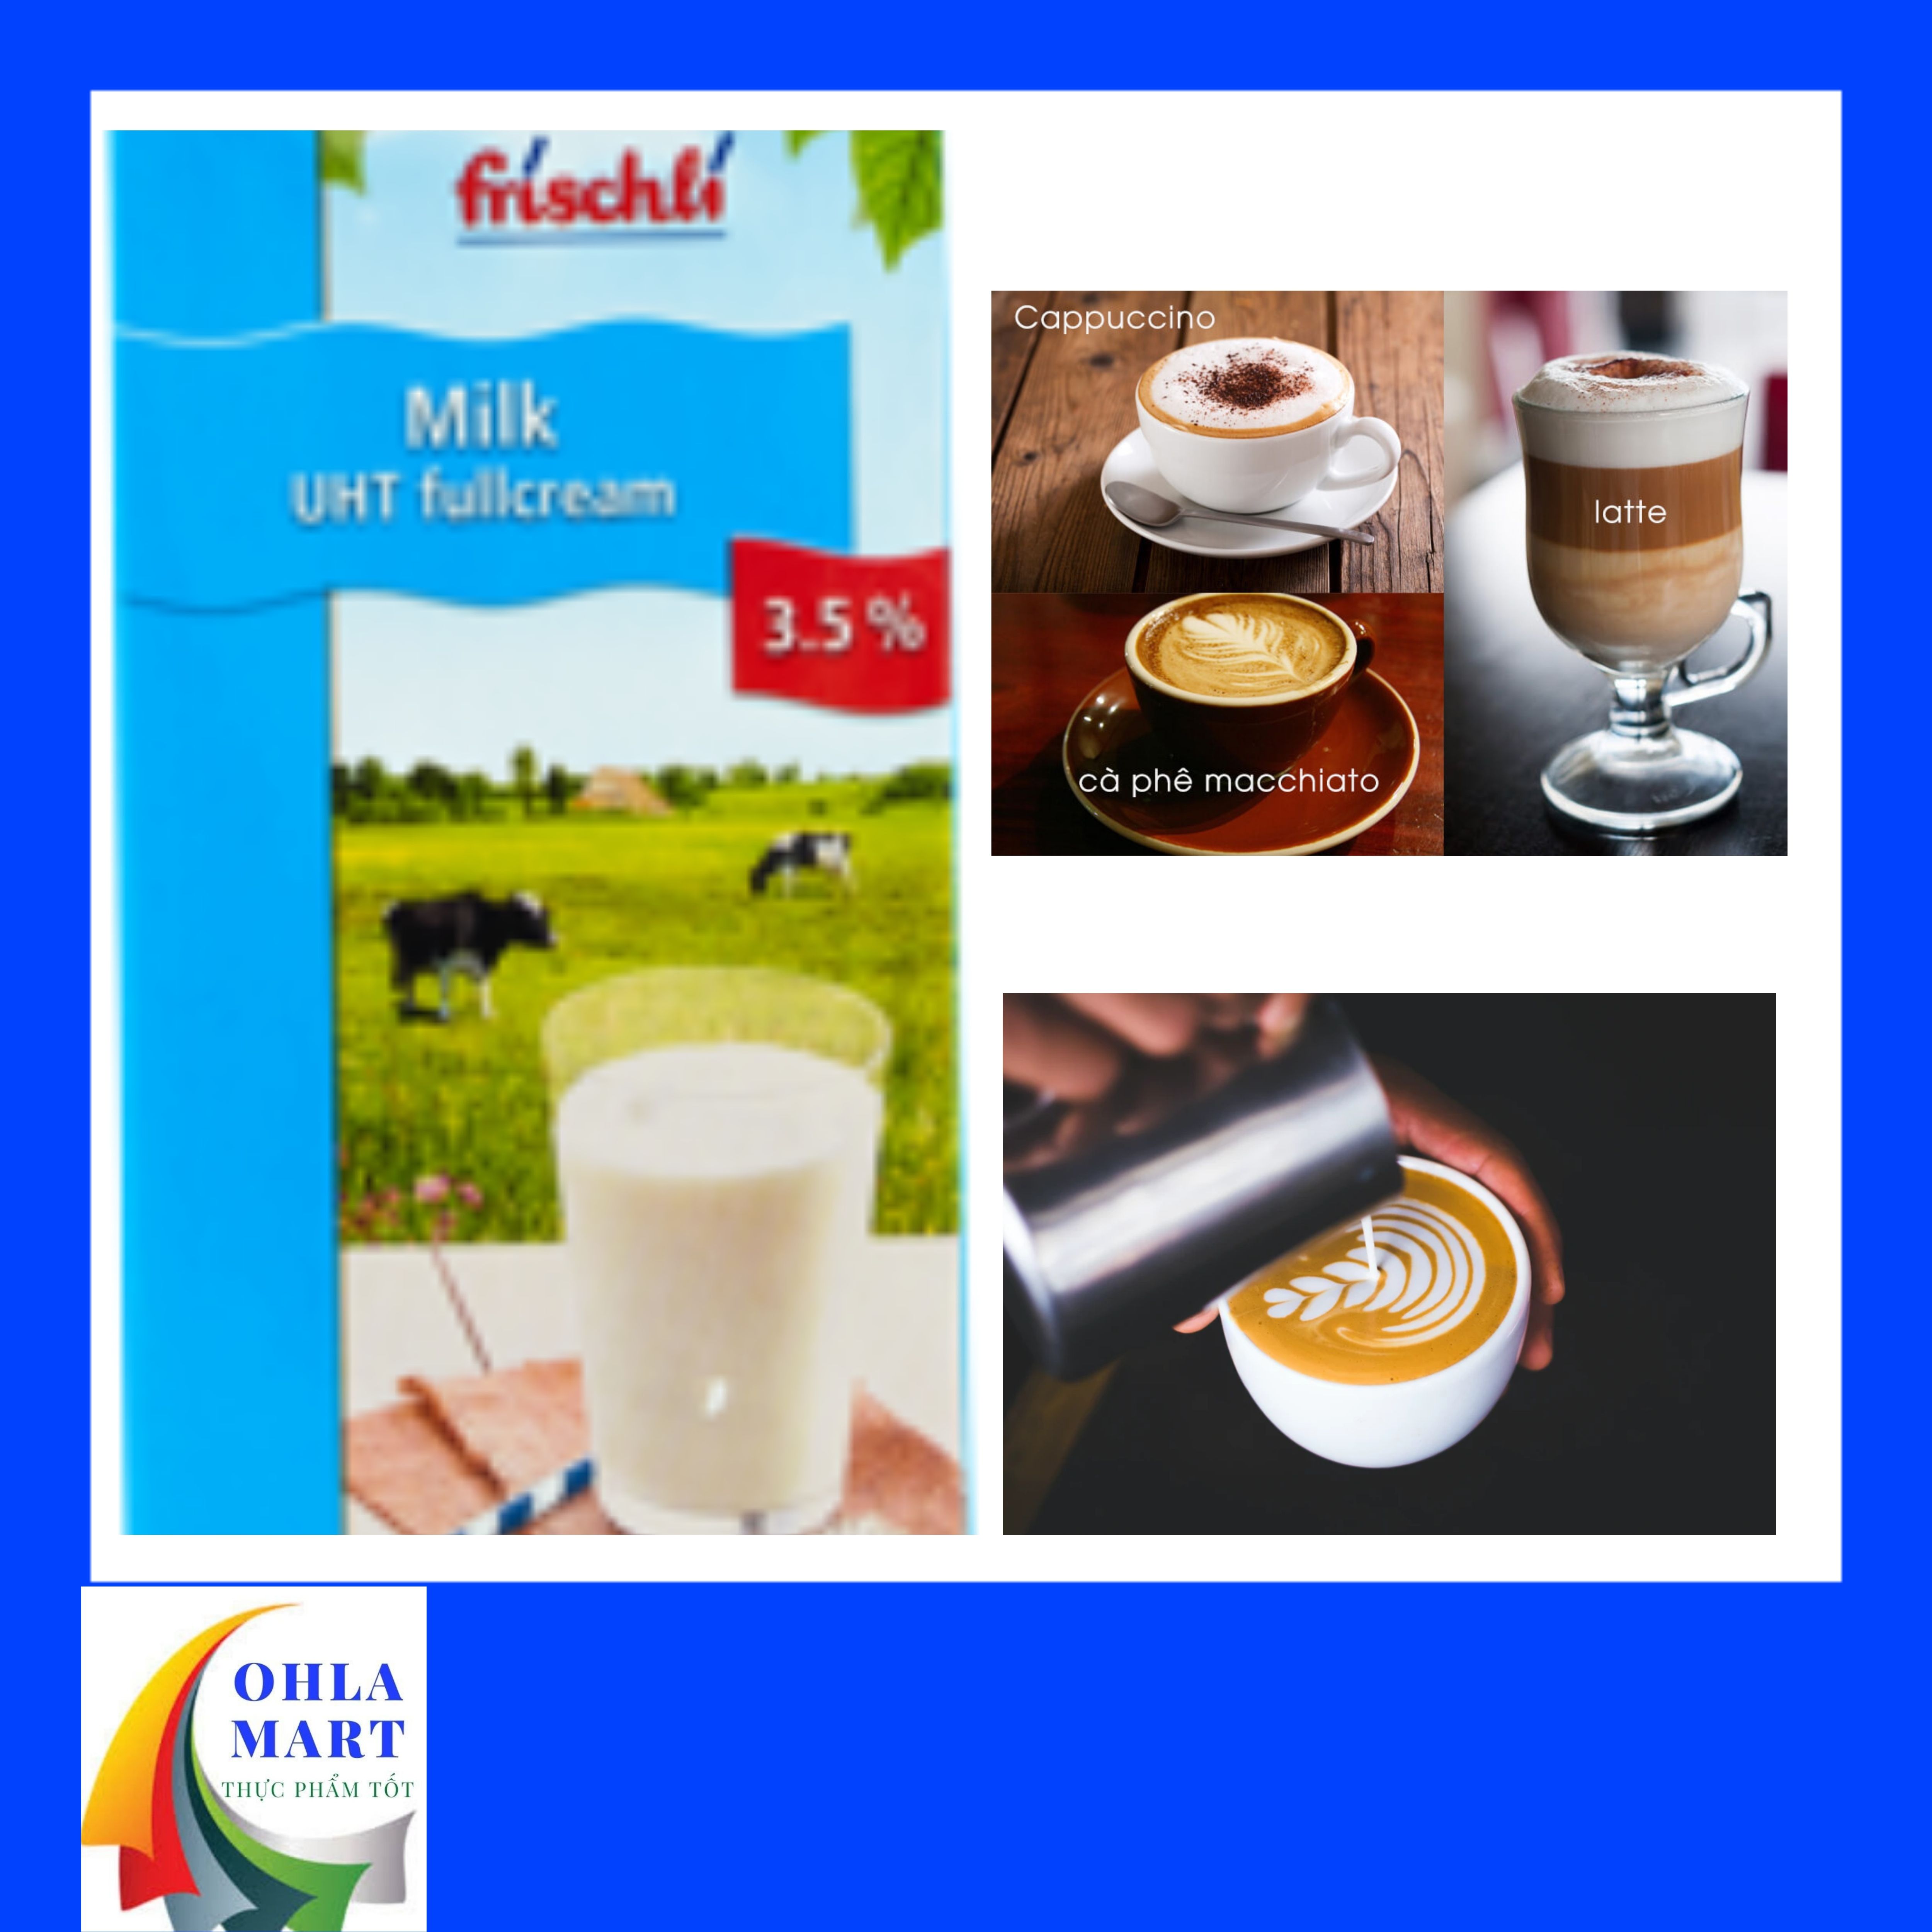 sữa tươi UHT Frischli nhập khẩu Đức nguyên kem 3.5% fat - Ohla mart